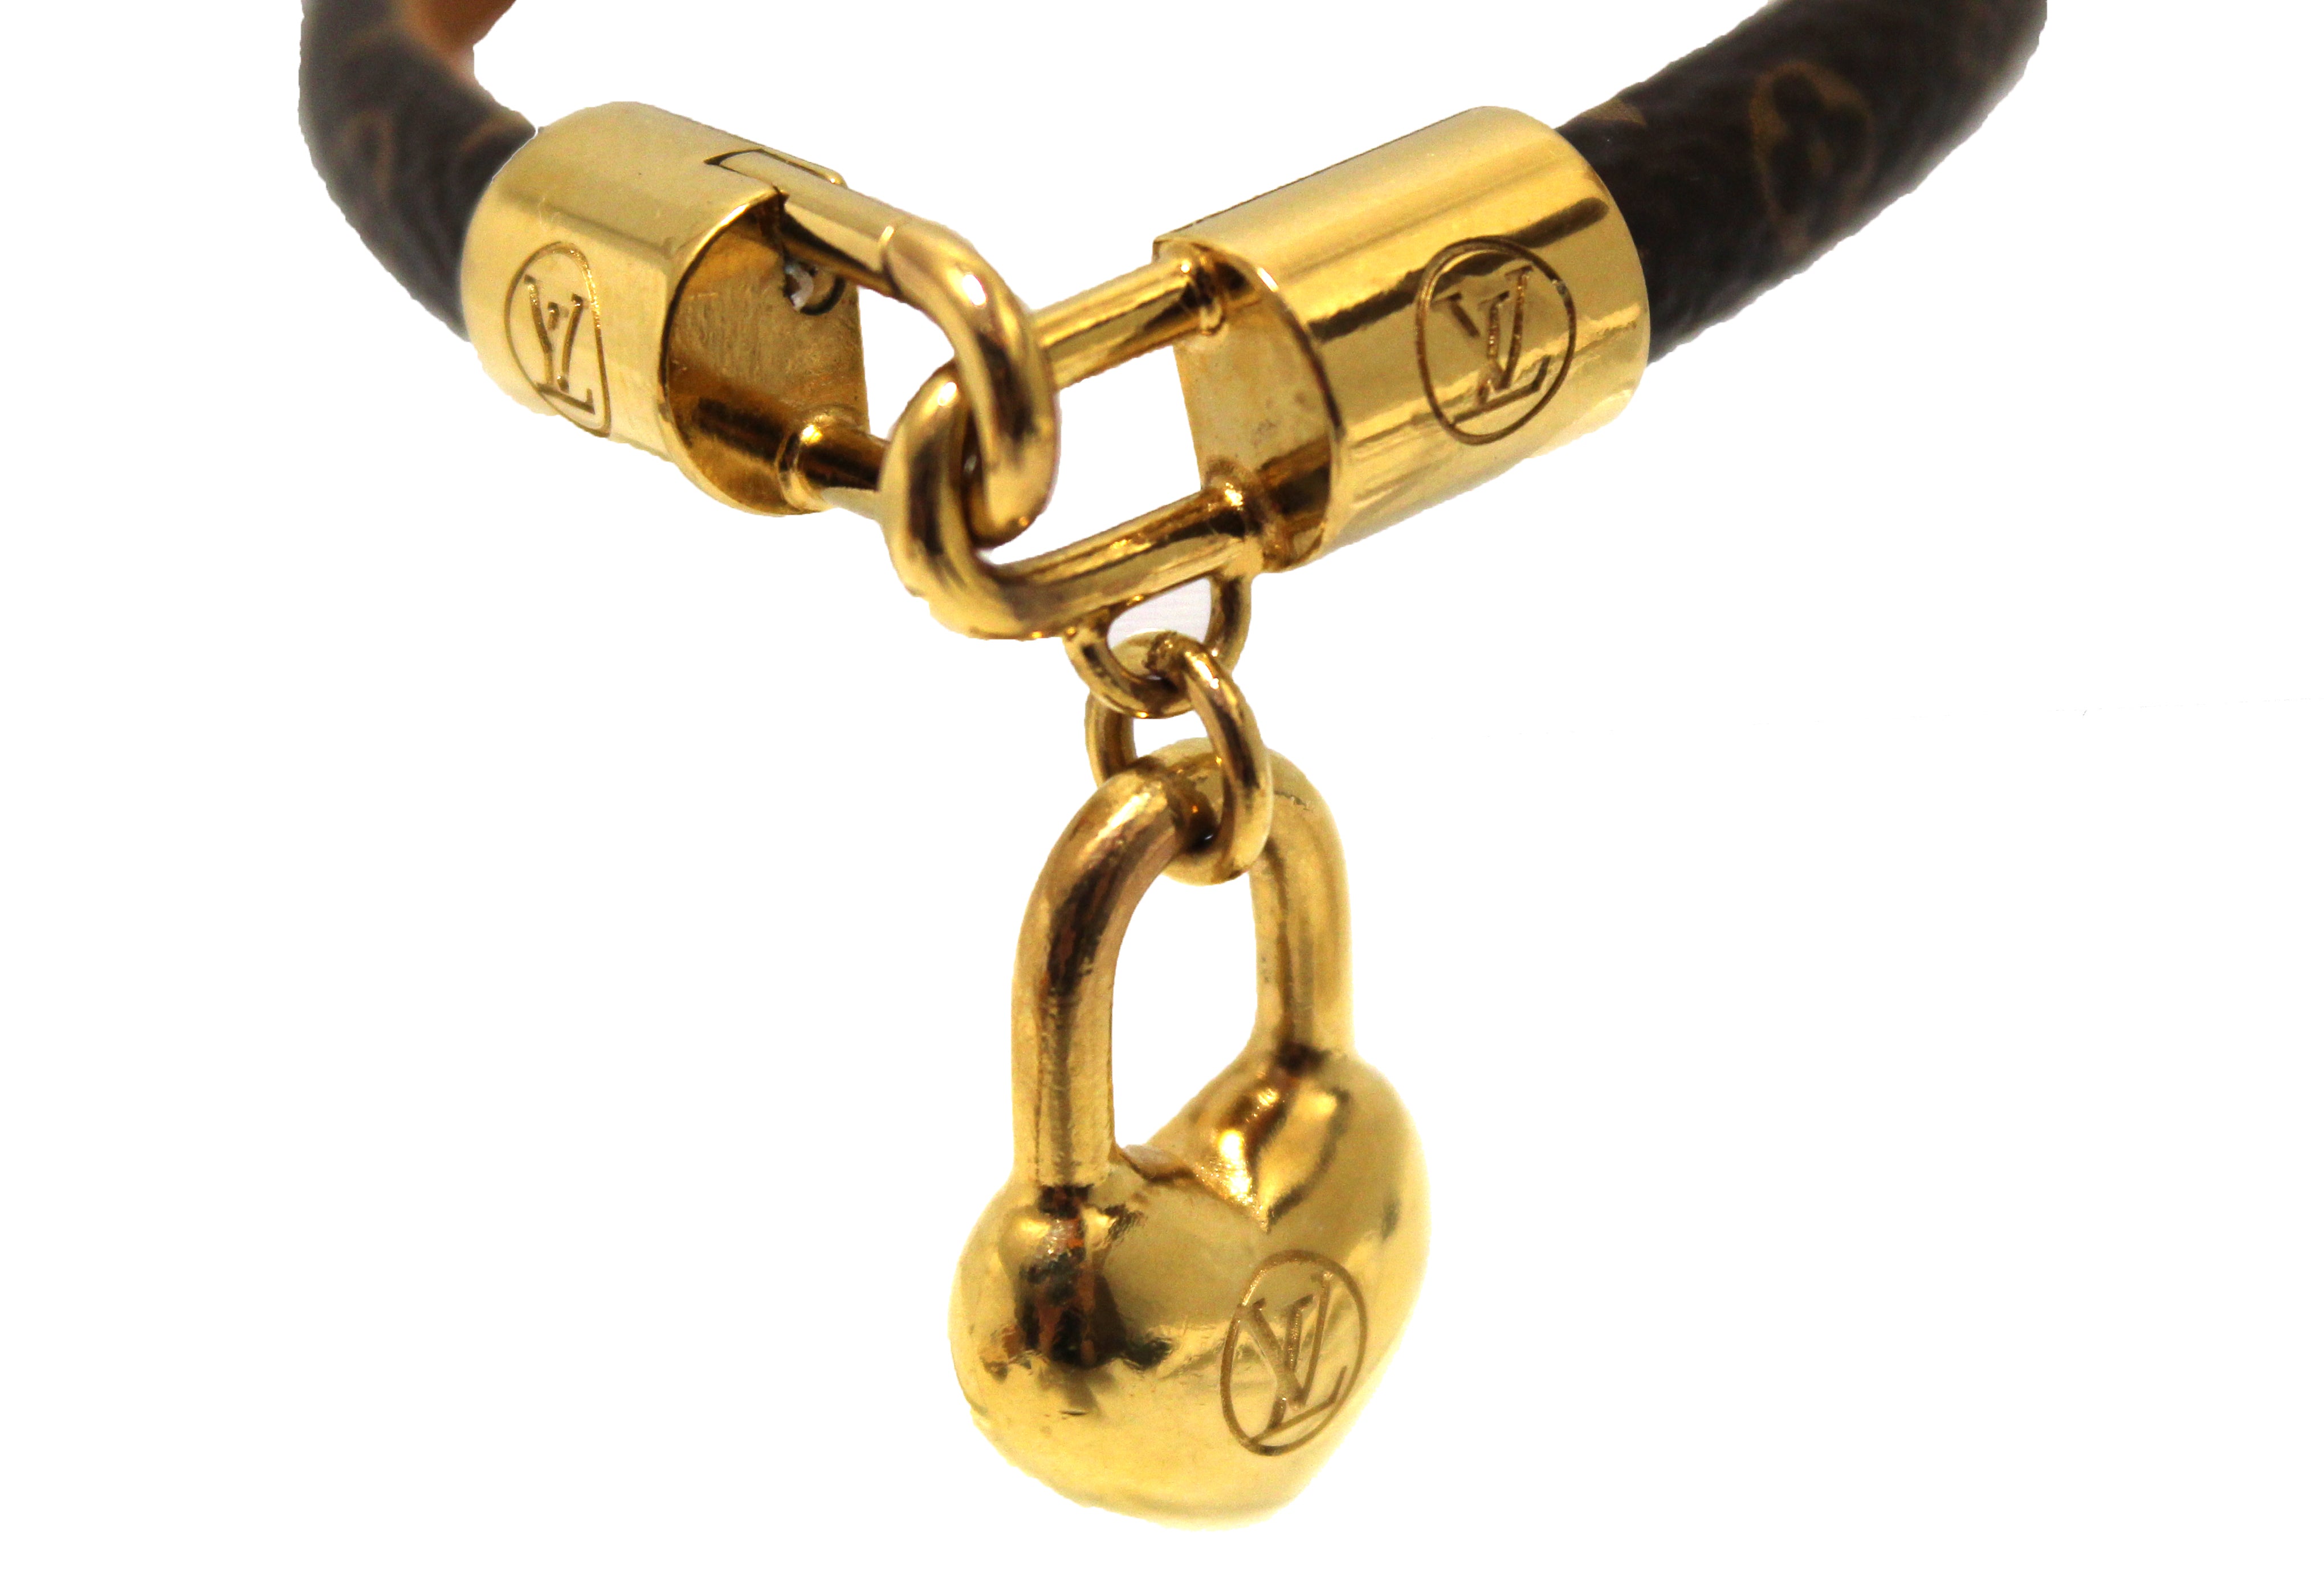 Authentic Louis Vuitton Nano Monogram Crazy In Lock Bracelet Size 17